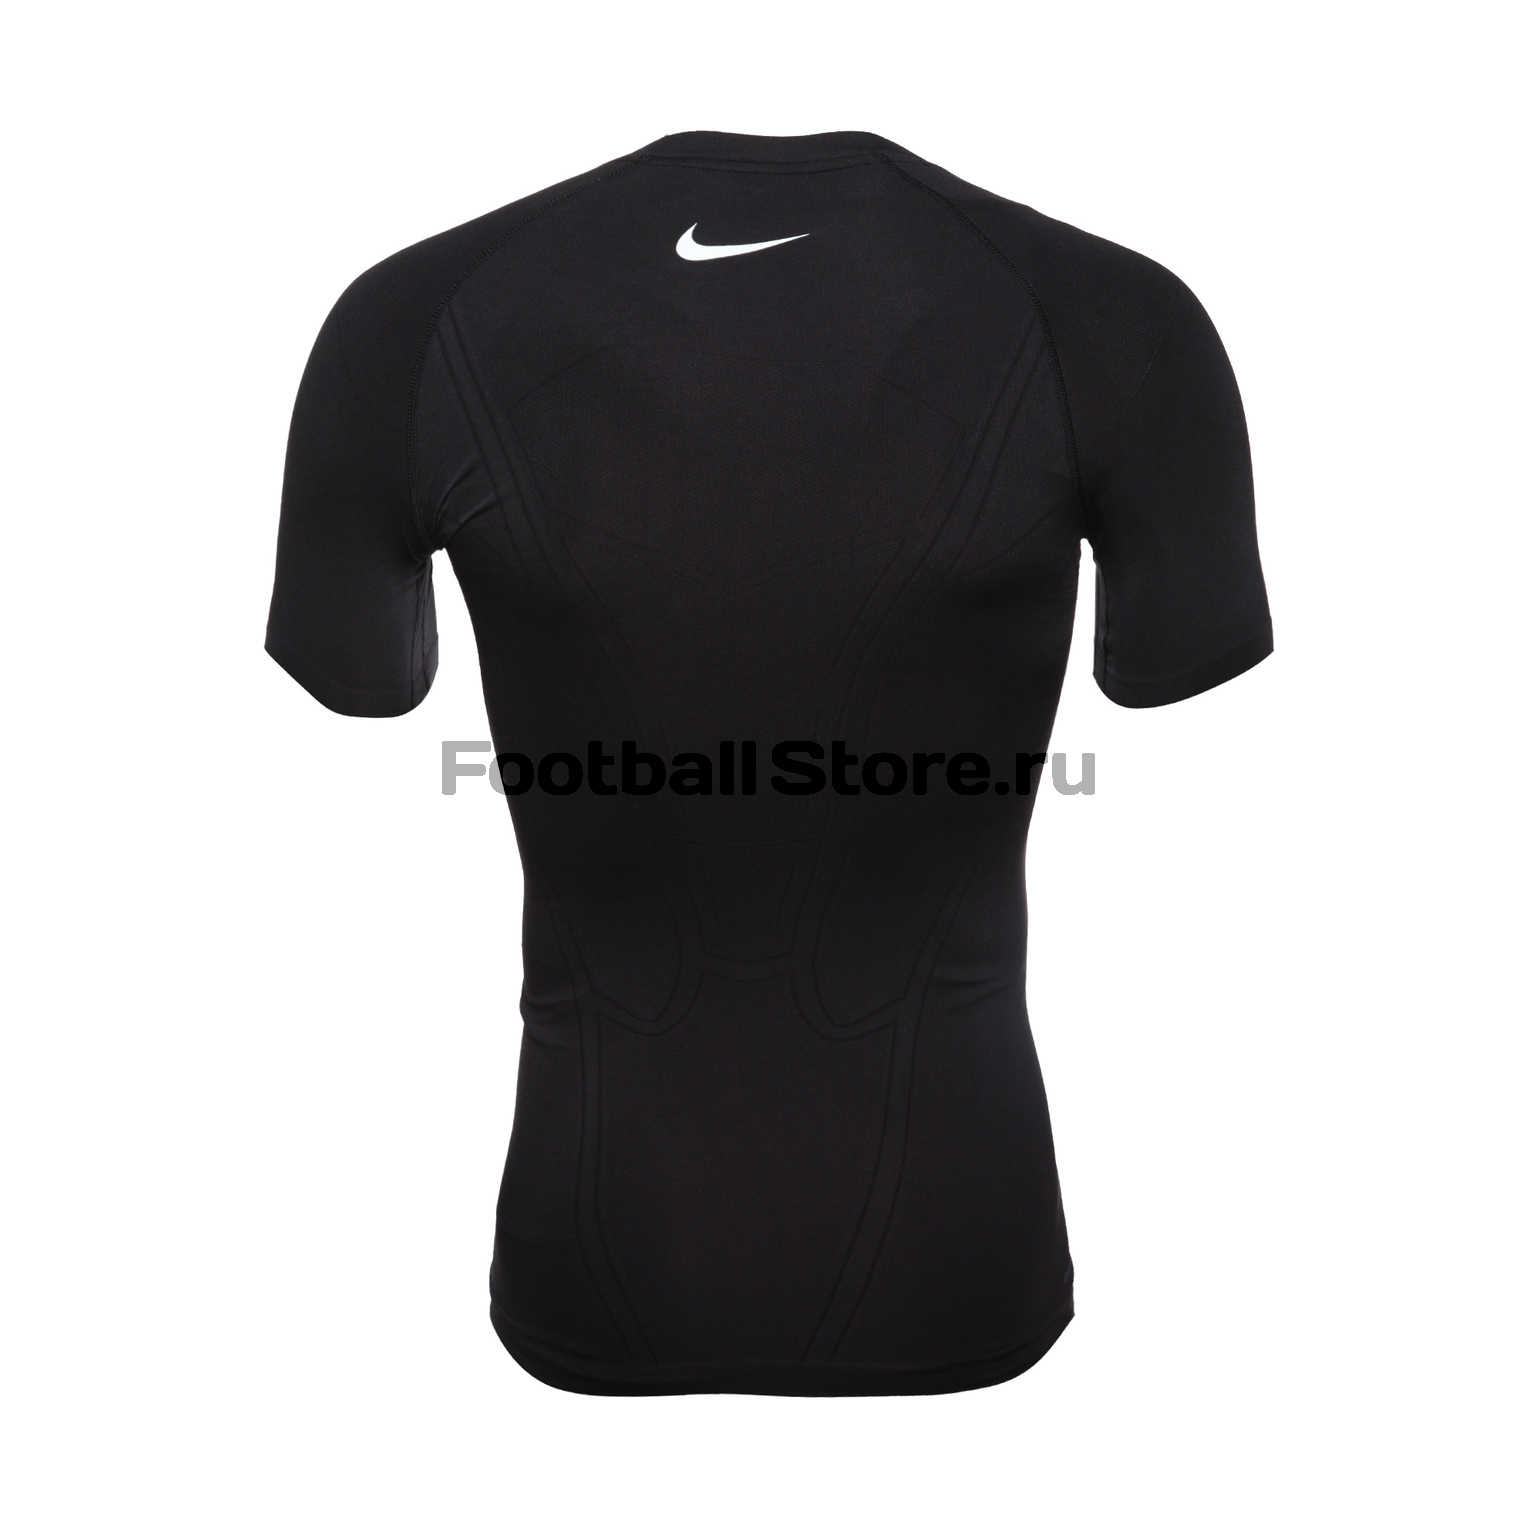 Белье футболка Nike Smls LS Top 824619-010